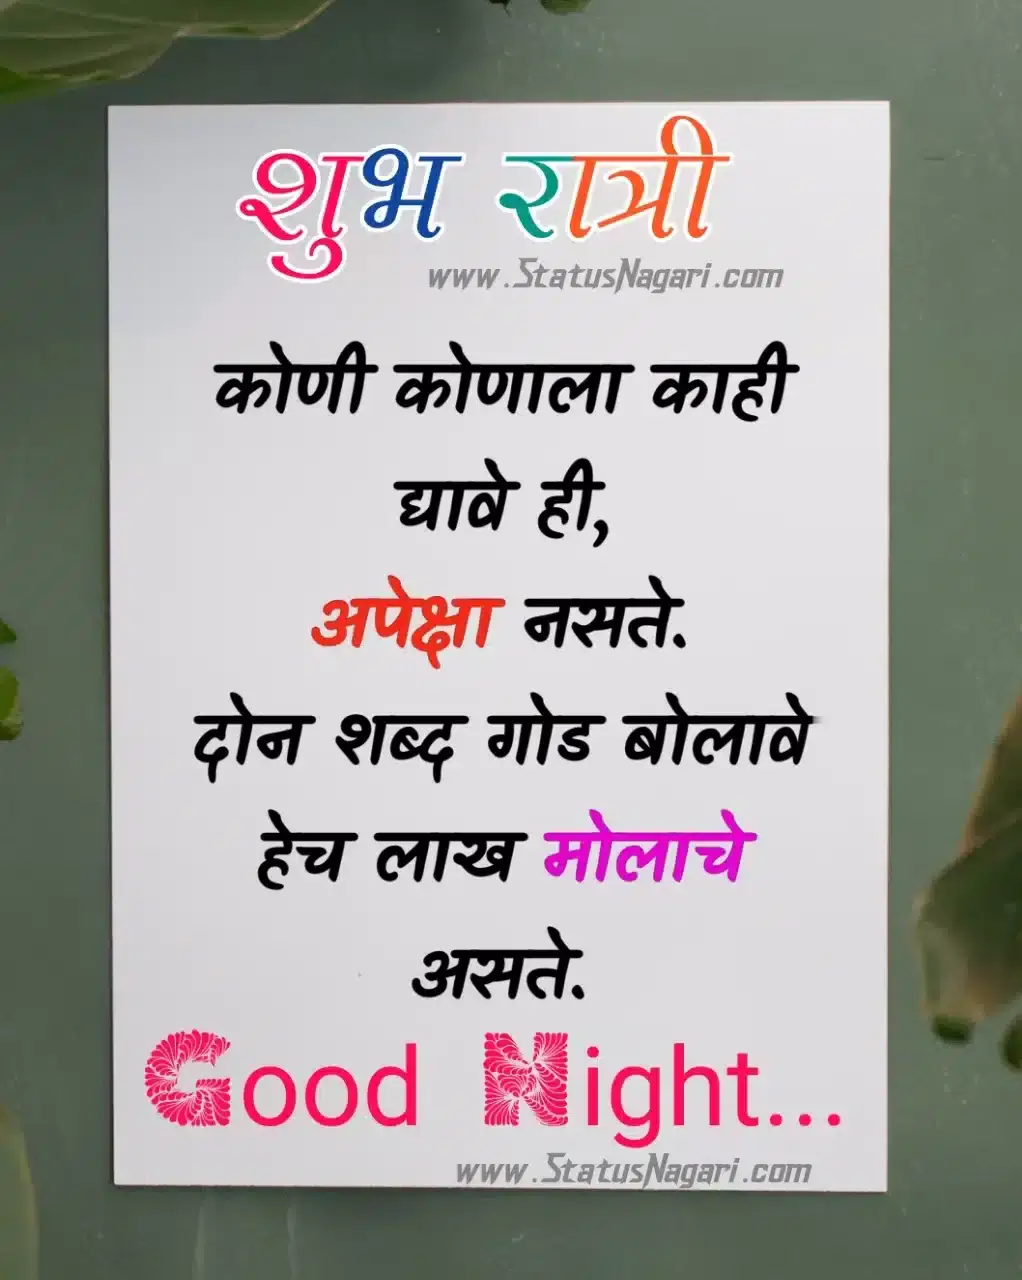 शुभ रात्री shubh ratri शुभ रात्री मैत्री संदेश good night marathi शुभ रात्री शुभेच्छा मराठी shubh